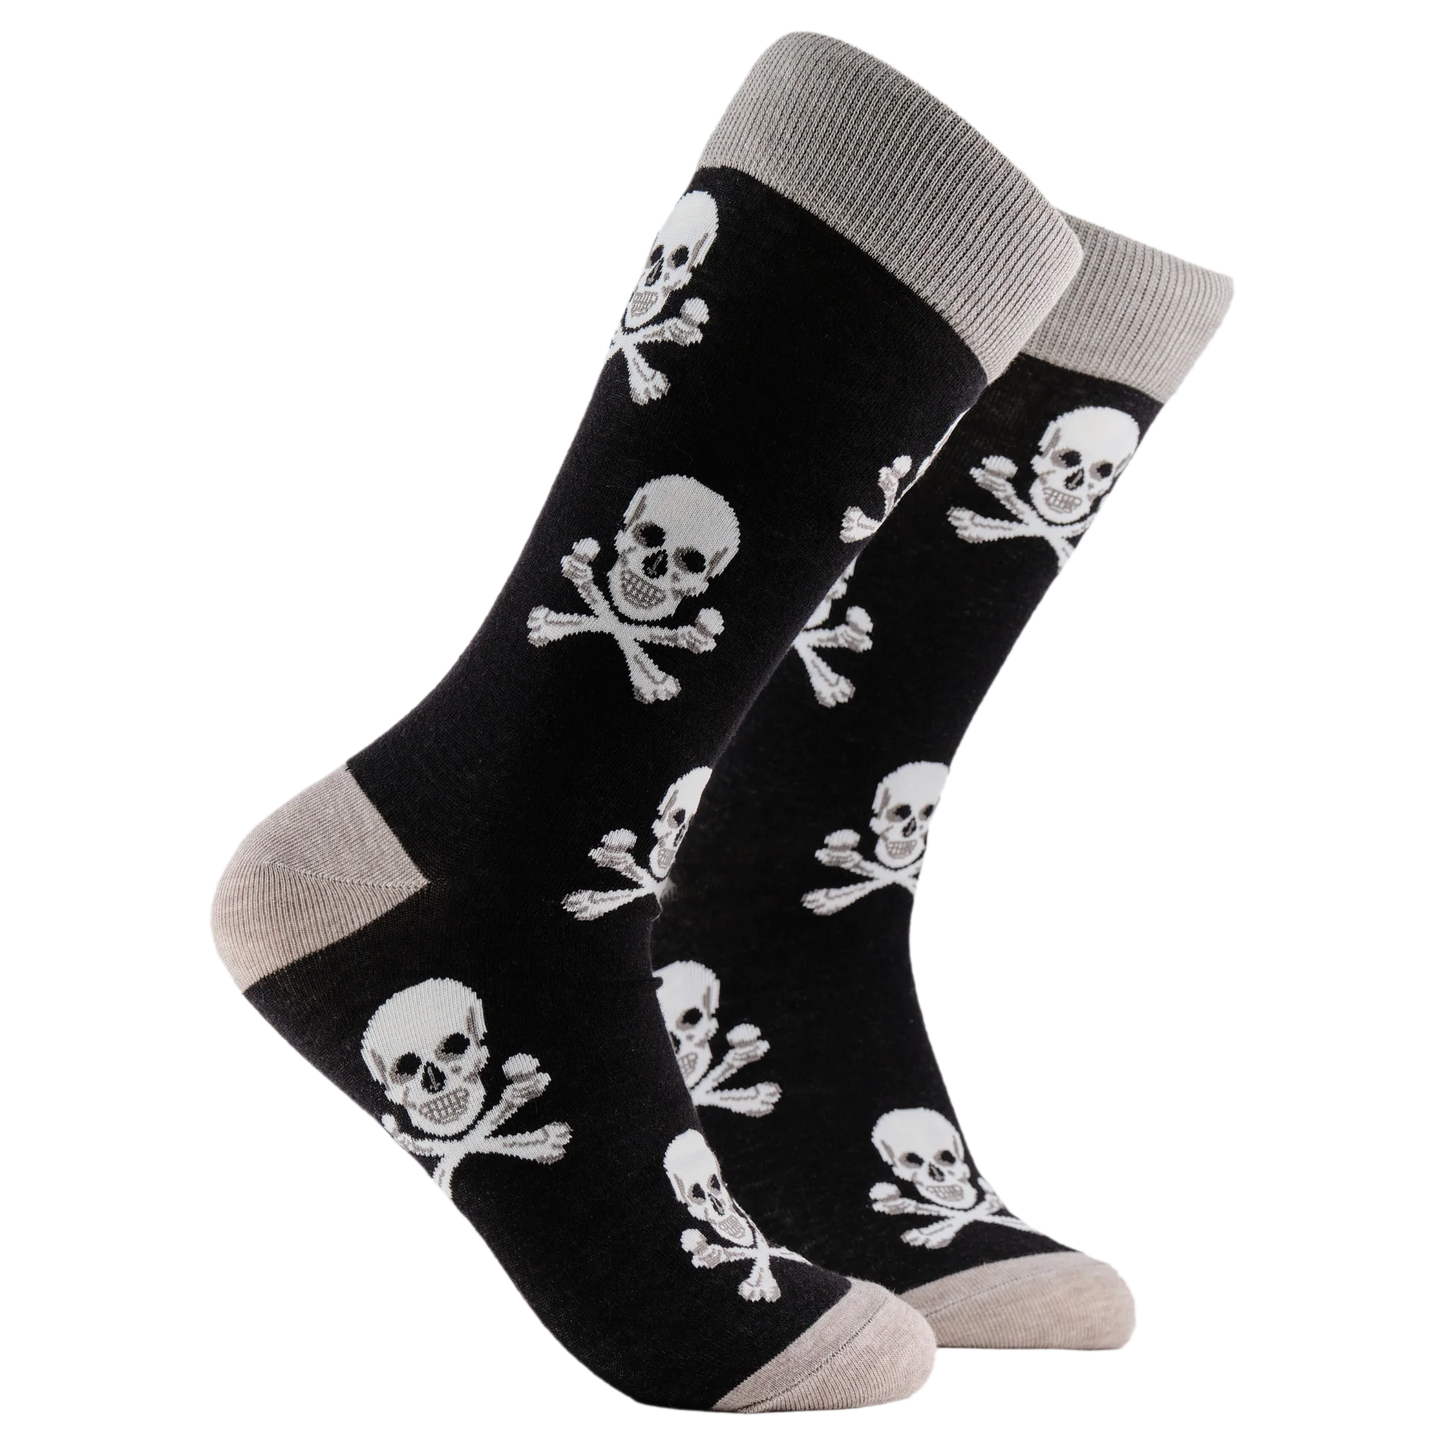 Soctopus Socks - Pirate Unisex, Size 9-12